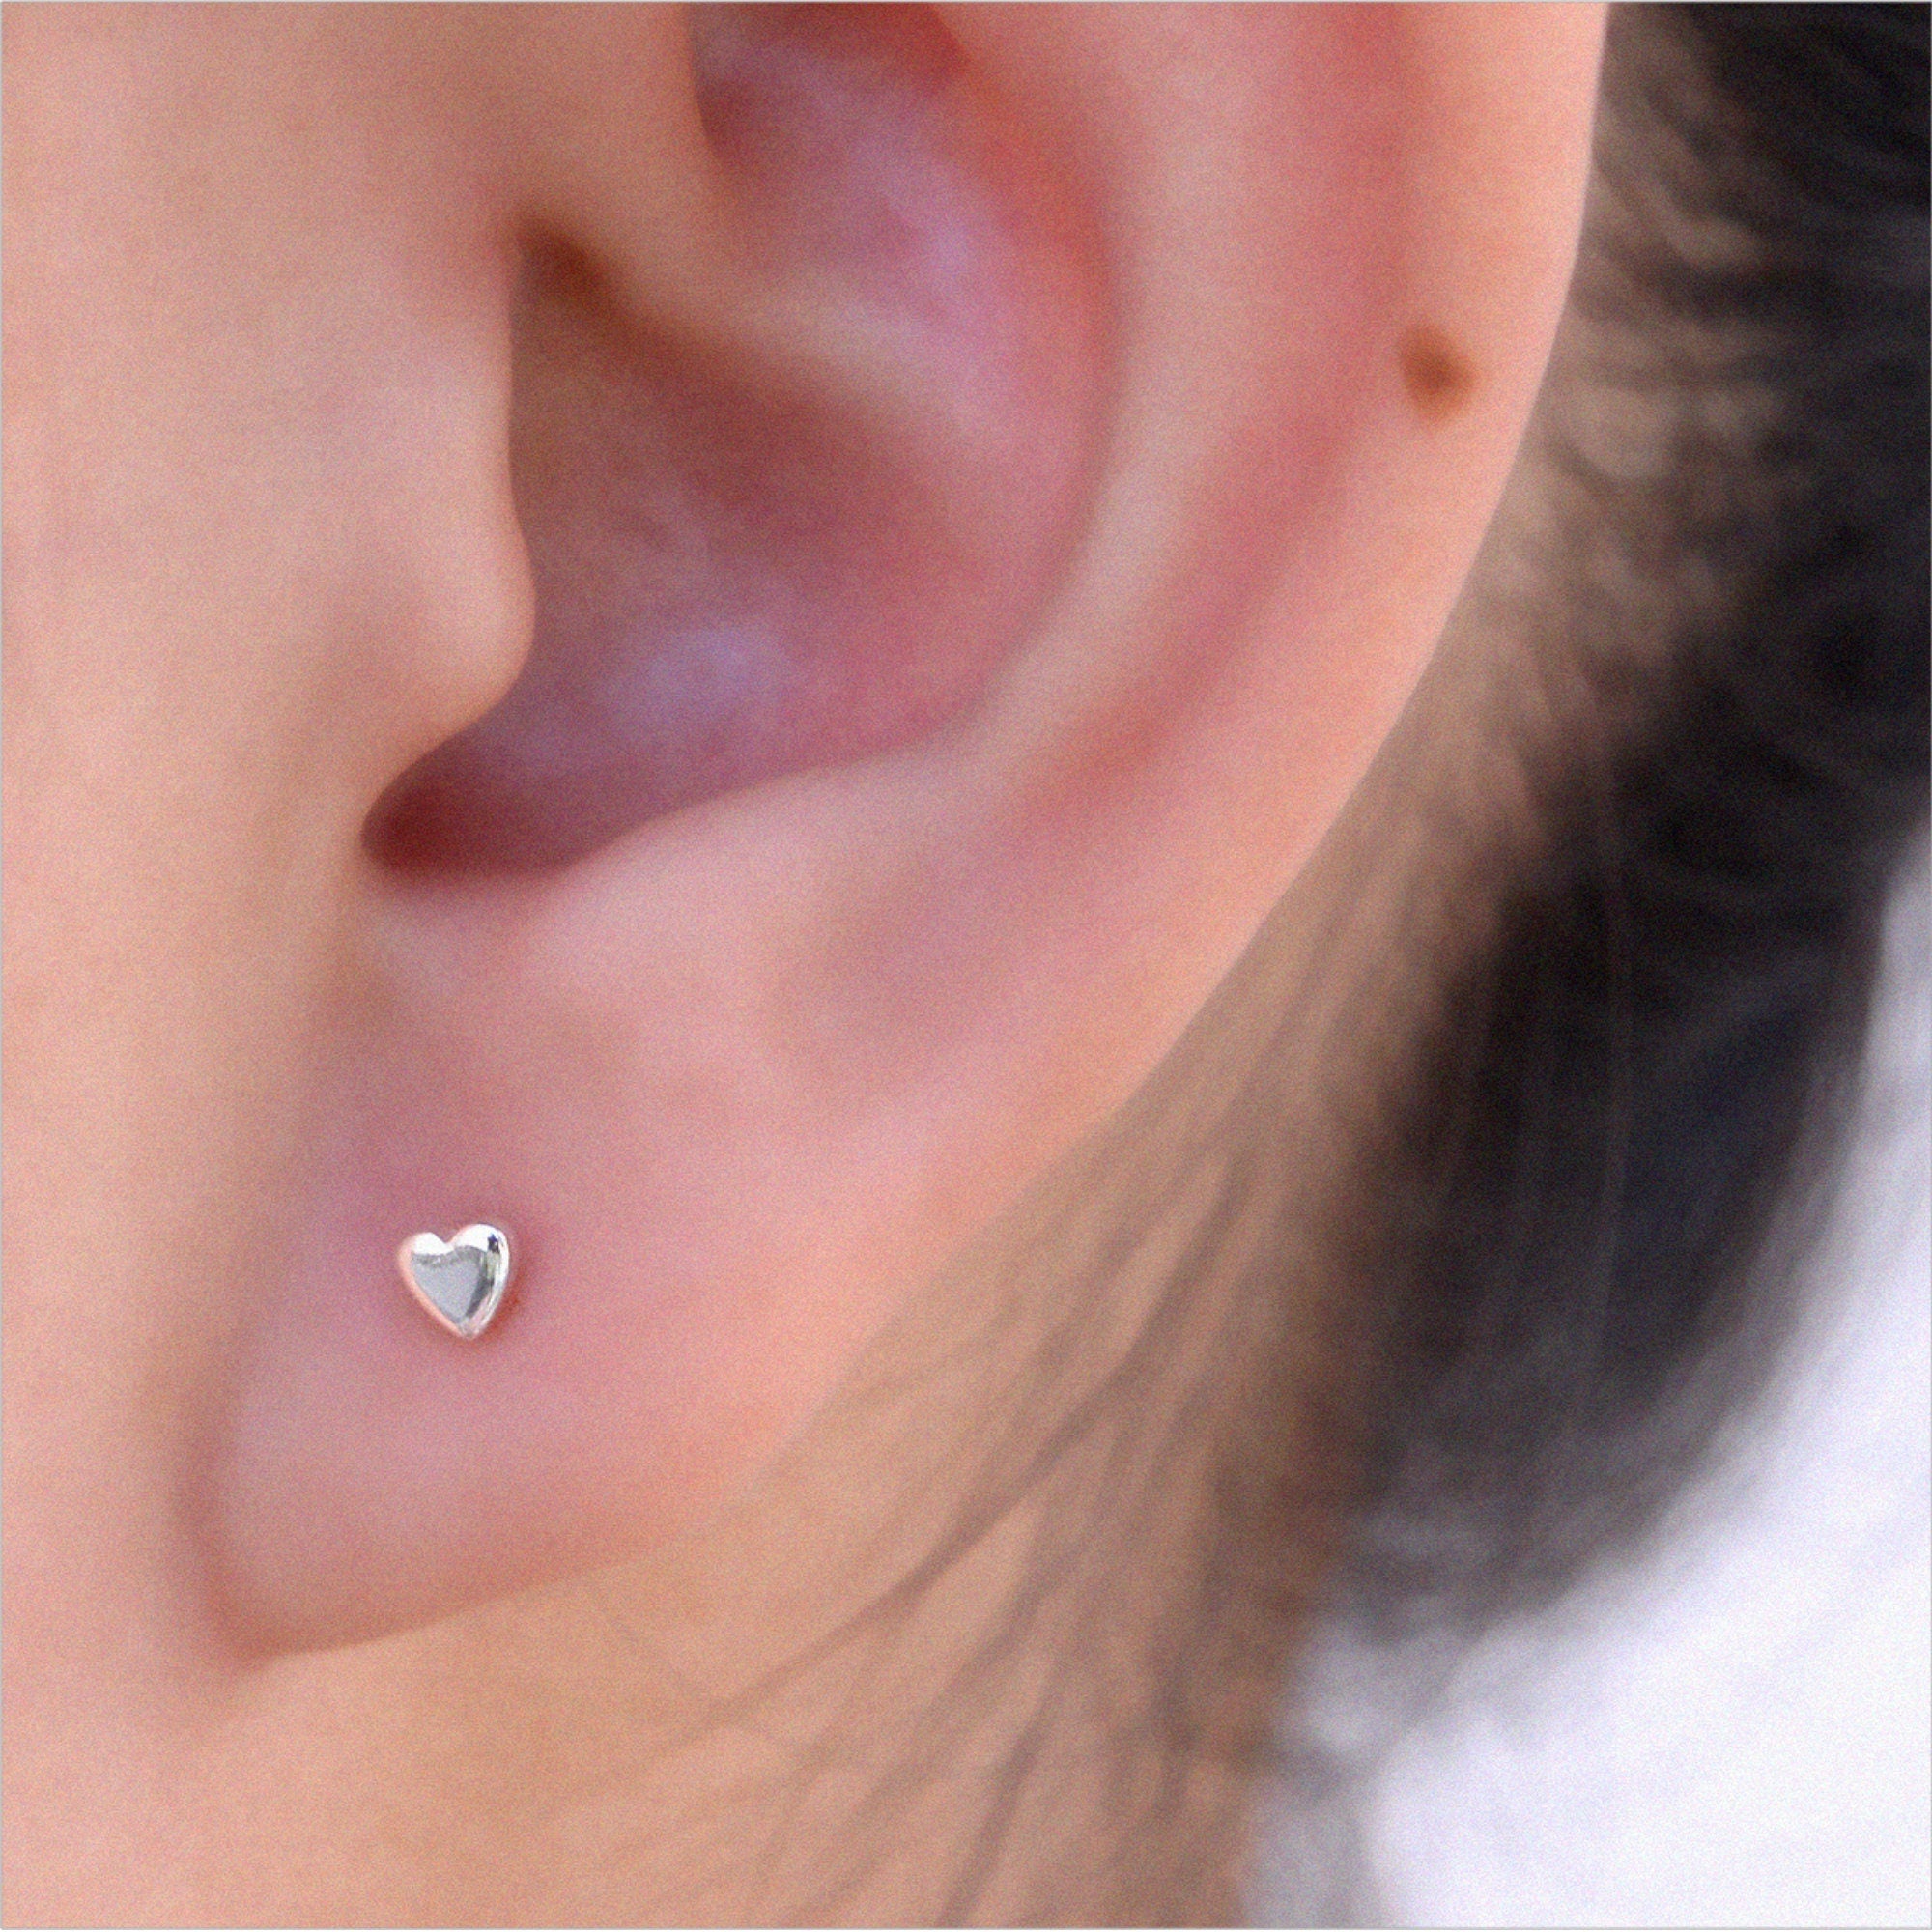 Tintin scandinavian jewellery - Kompass - sterling silver heart stud earring